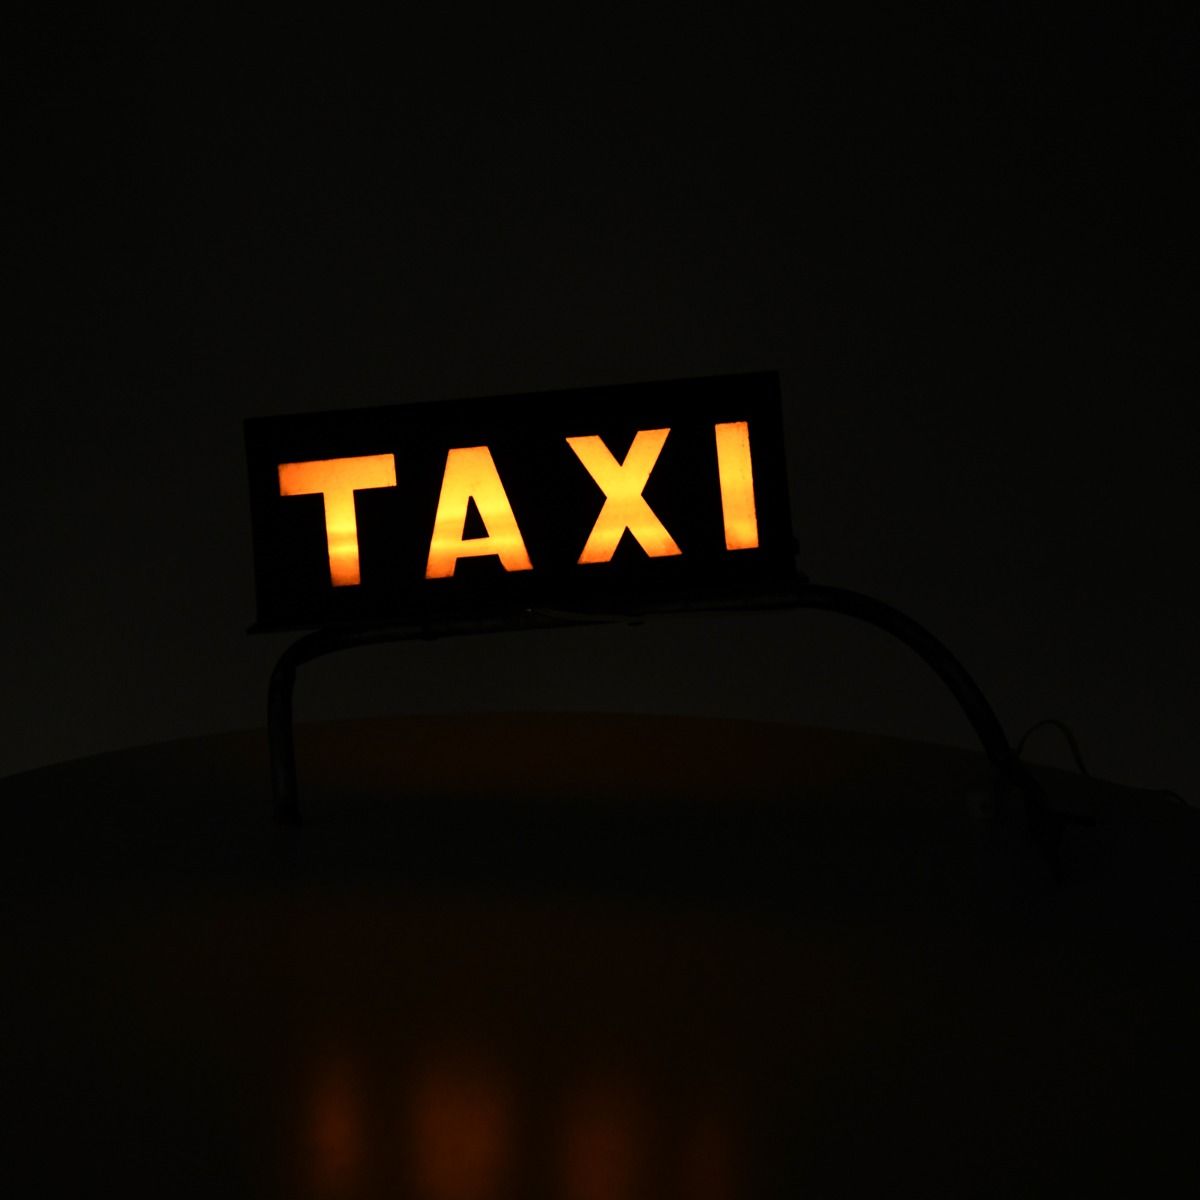 Vintage Taxi Light